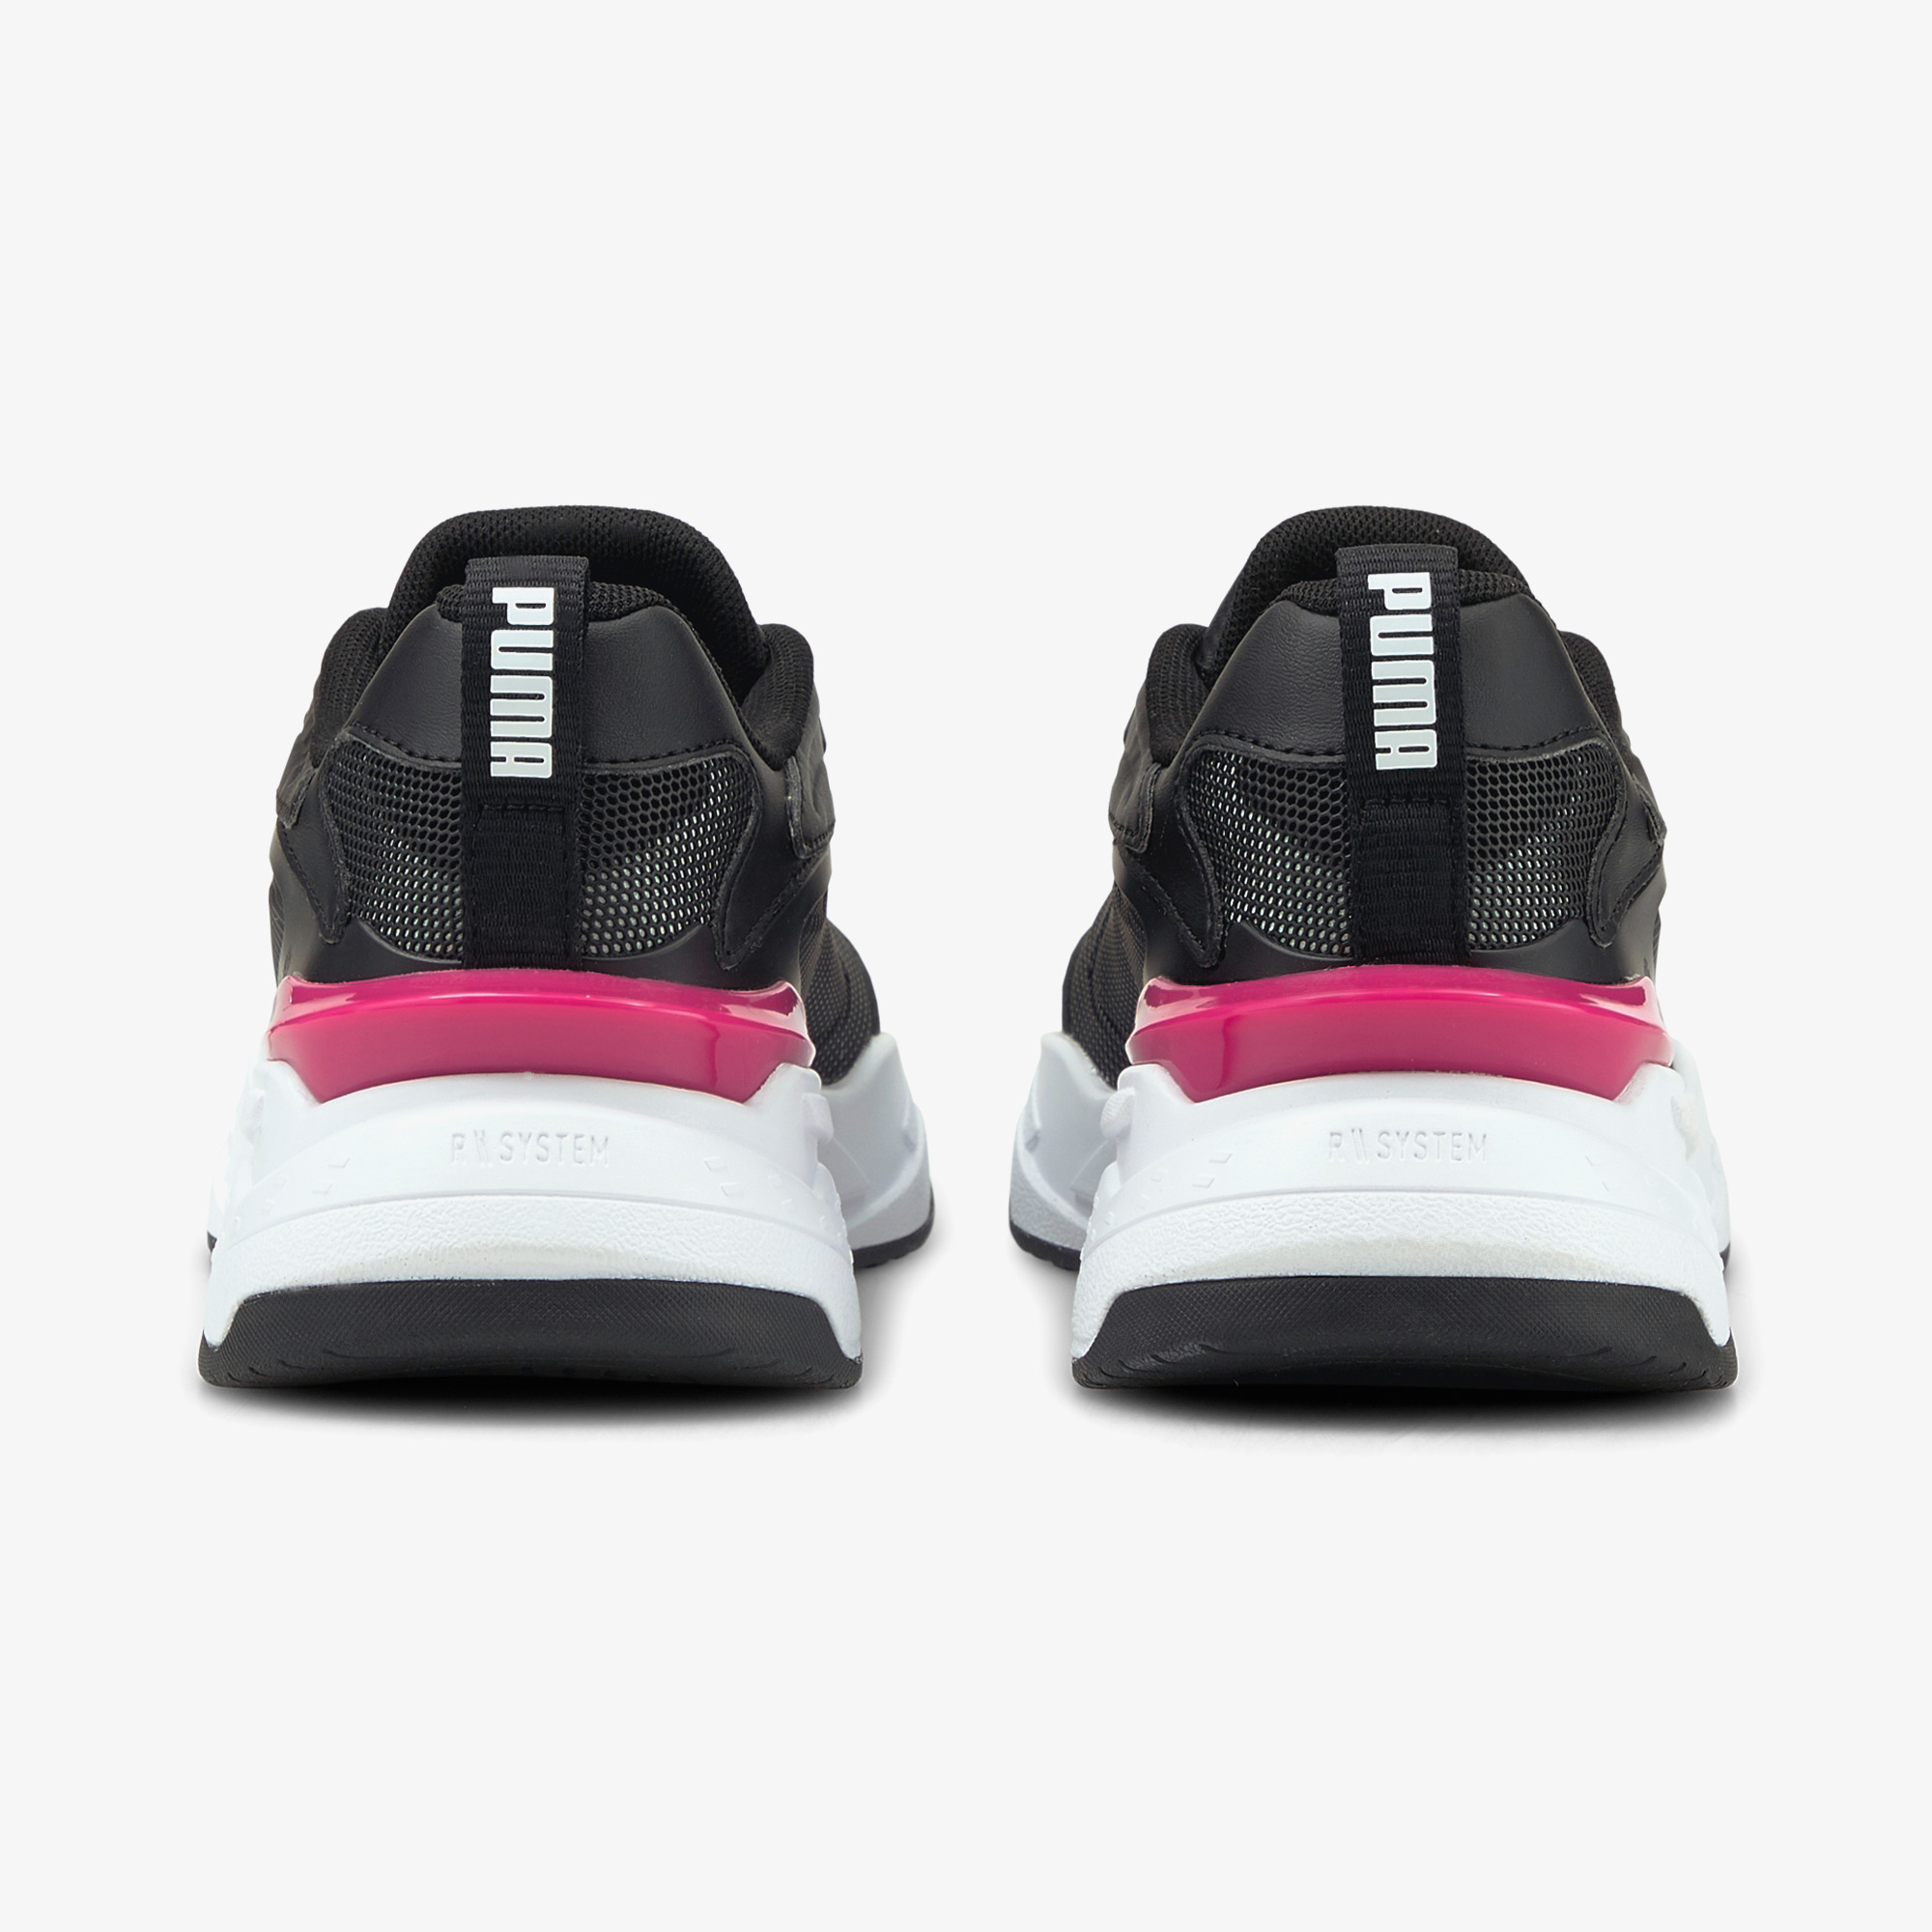 Puma RS-Fast Kadın Siyah Spor Ayakkabı